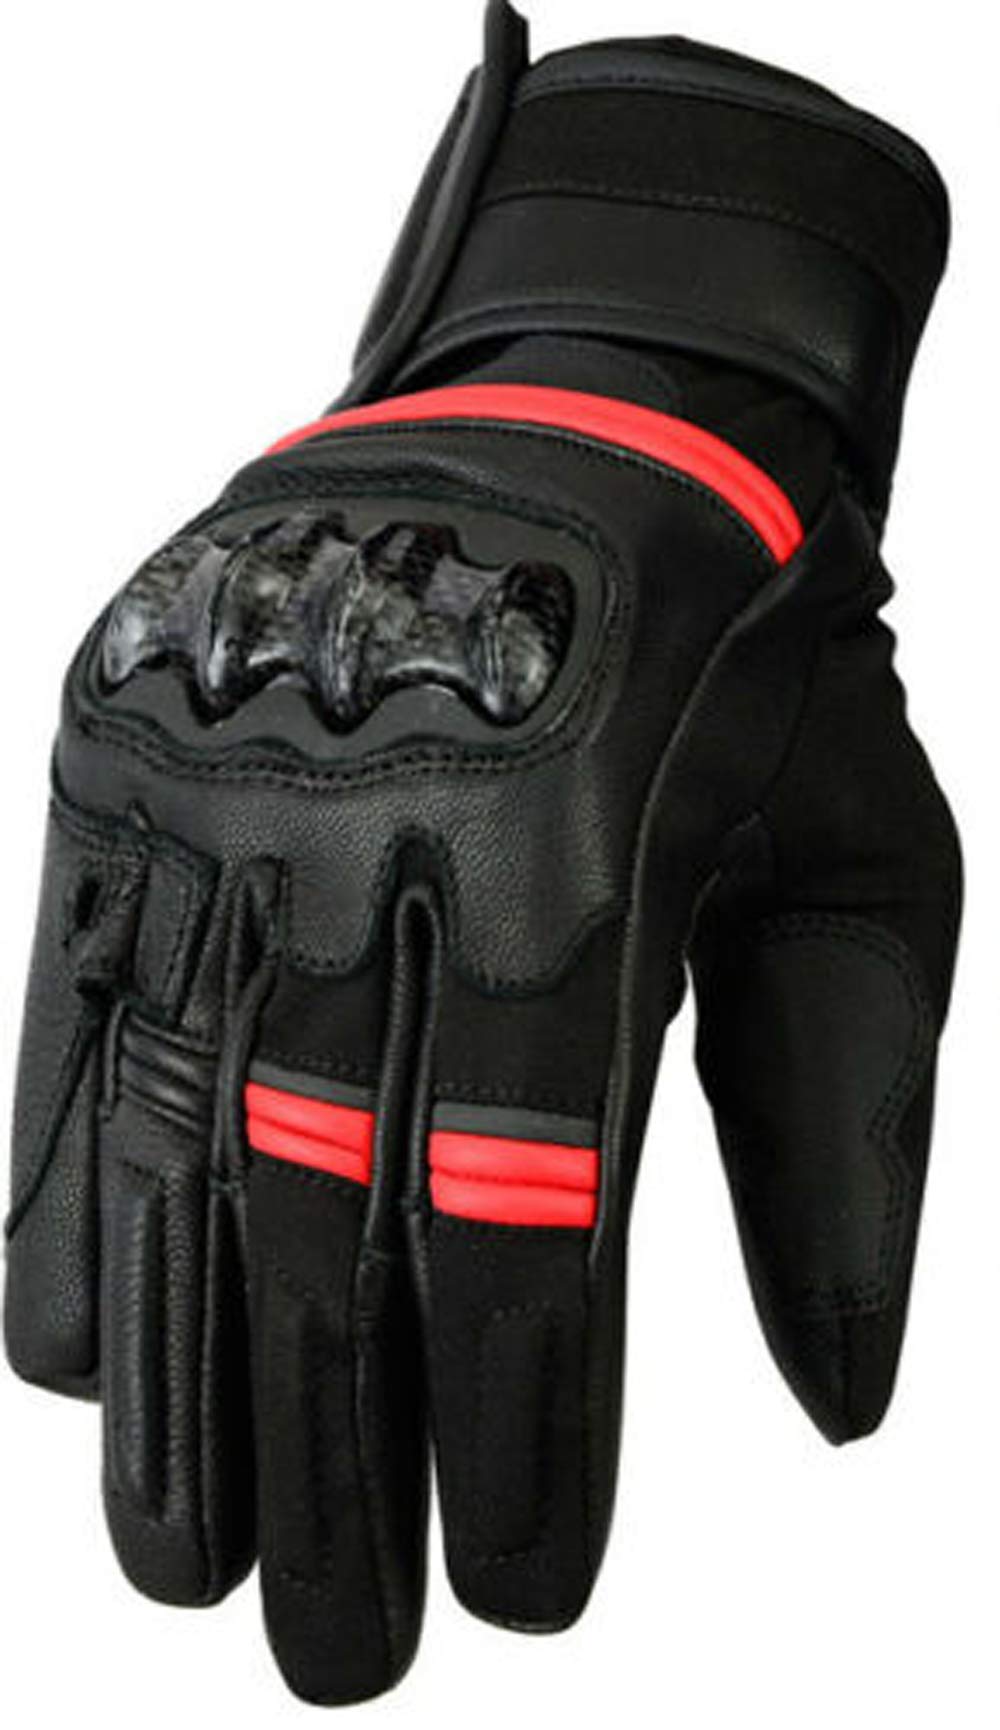 Bikers Gear Australia Limited Vega kurz Sport Motorrad Handschuh rot, Größe Medium von Bikers Gear Australia